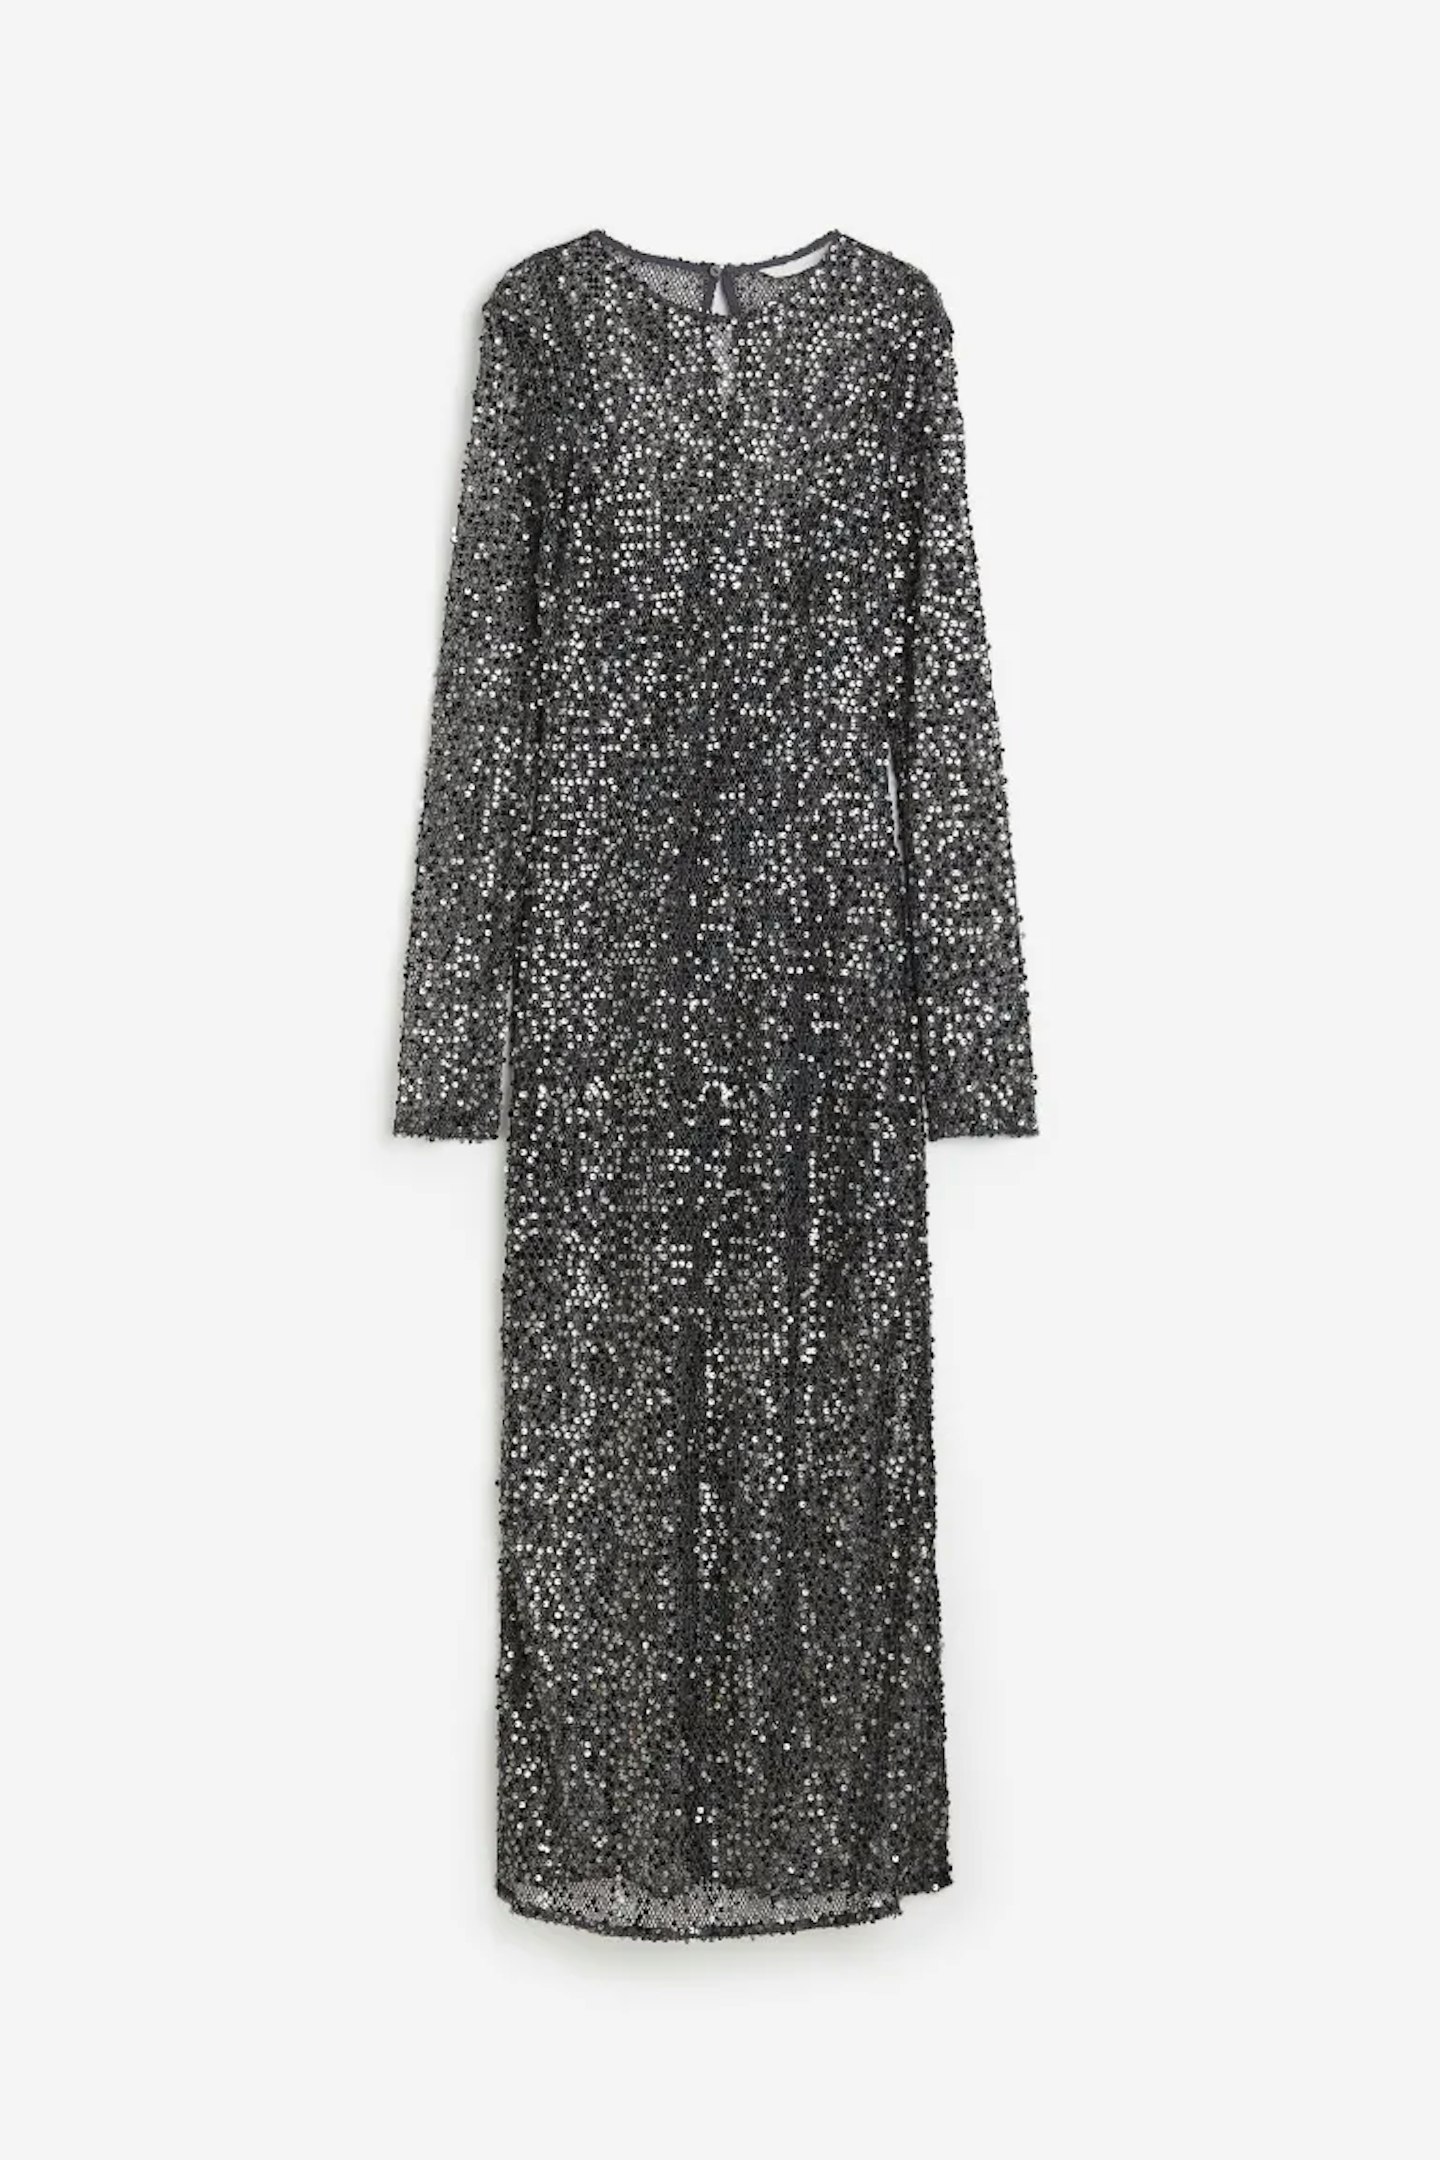 H&M, Sequinned Net Dress